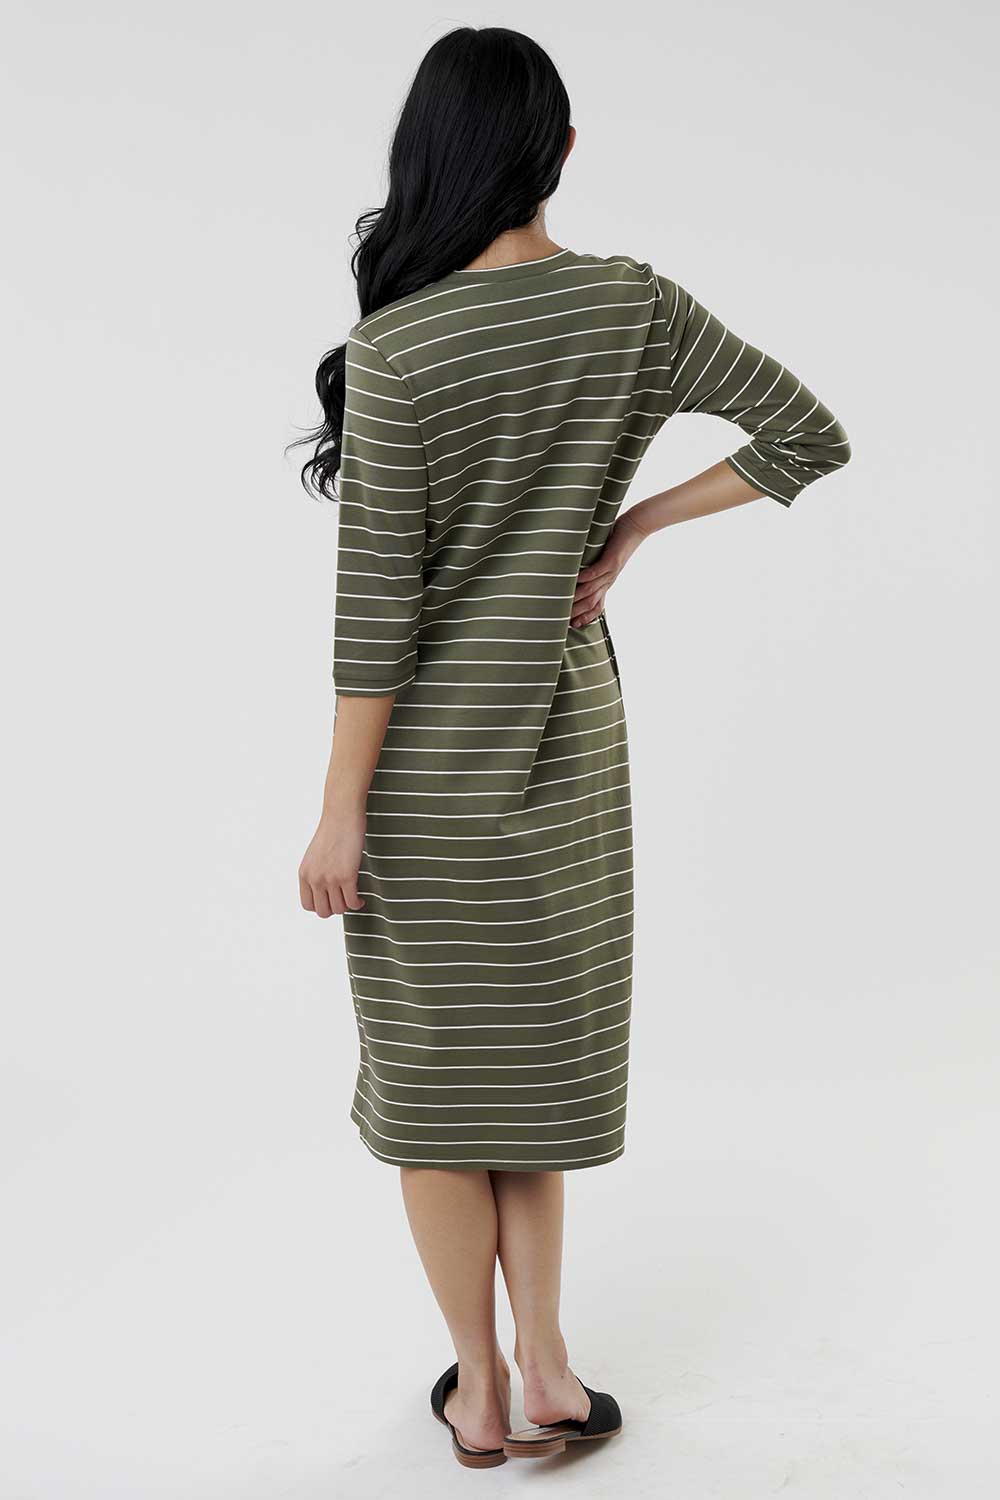 Any Weather Green Striped Sheath Dress